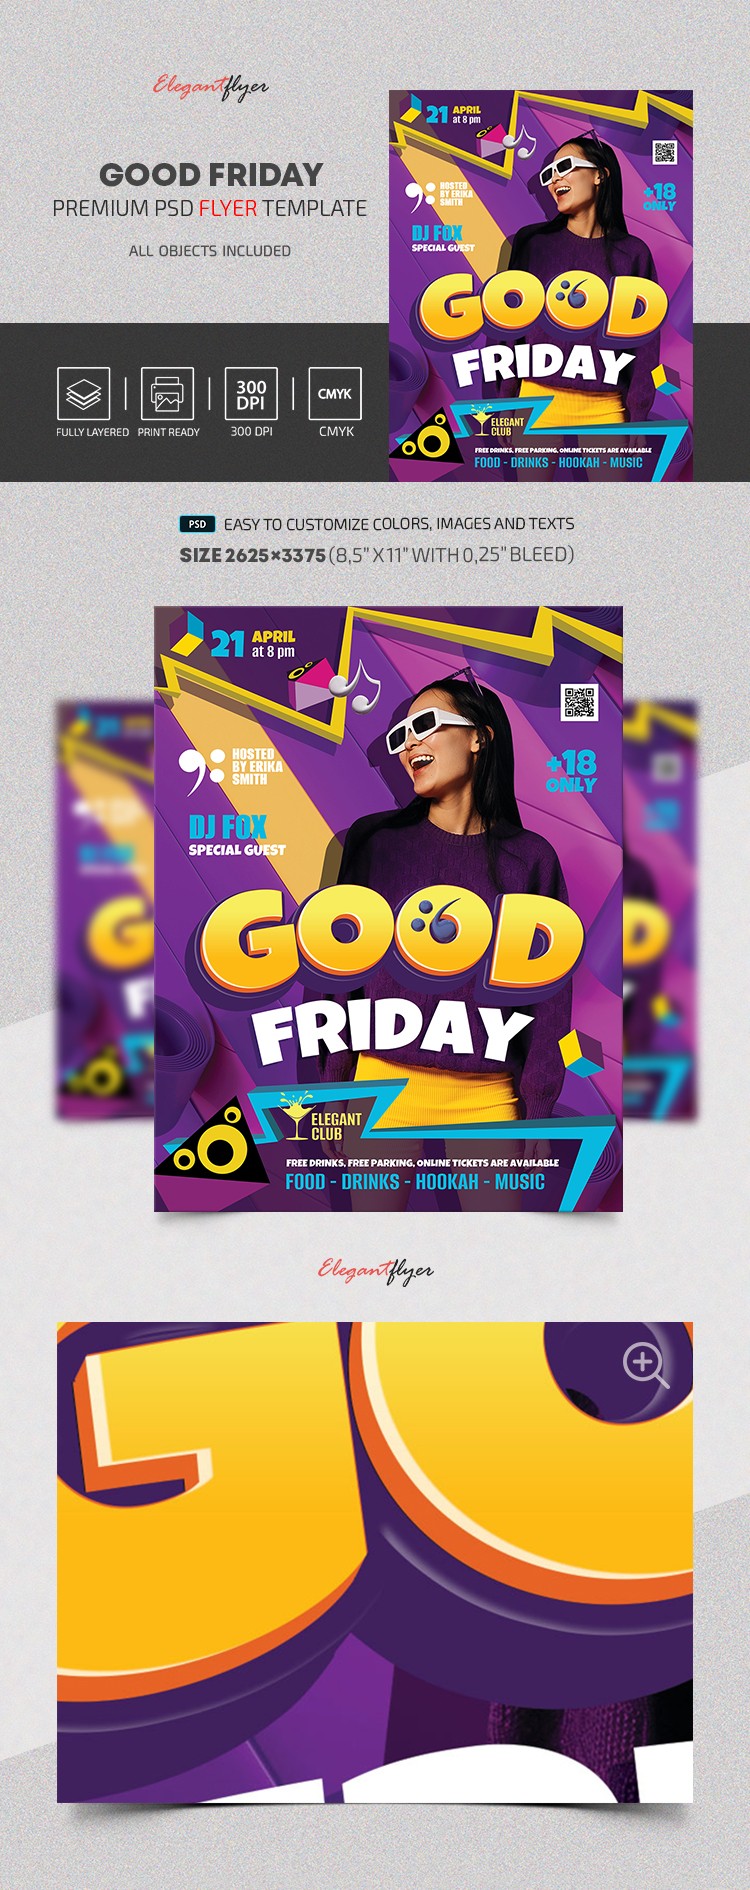 Good Friday Flyer by ElegantFlyer